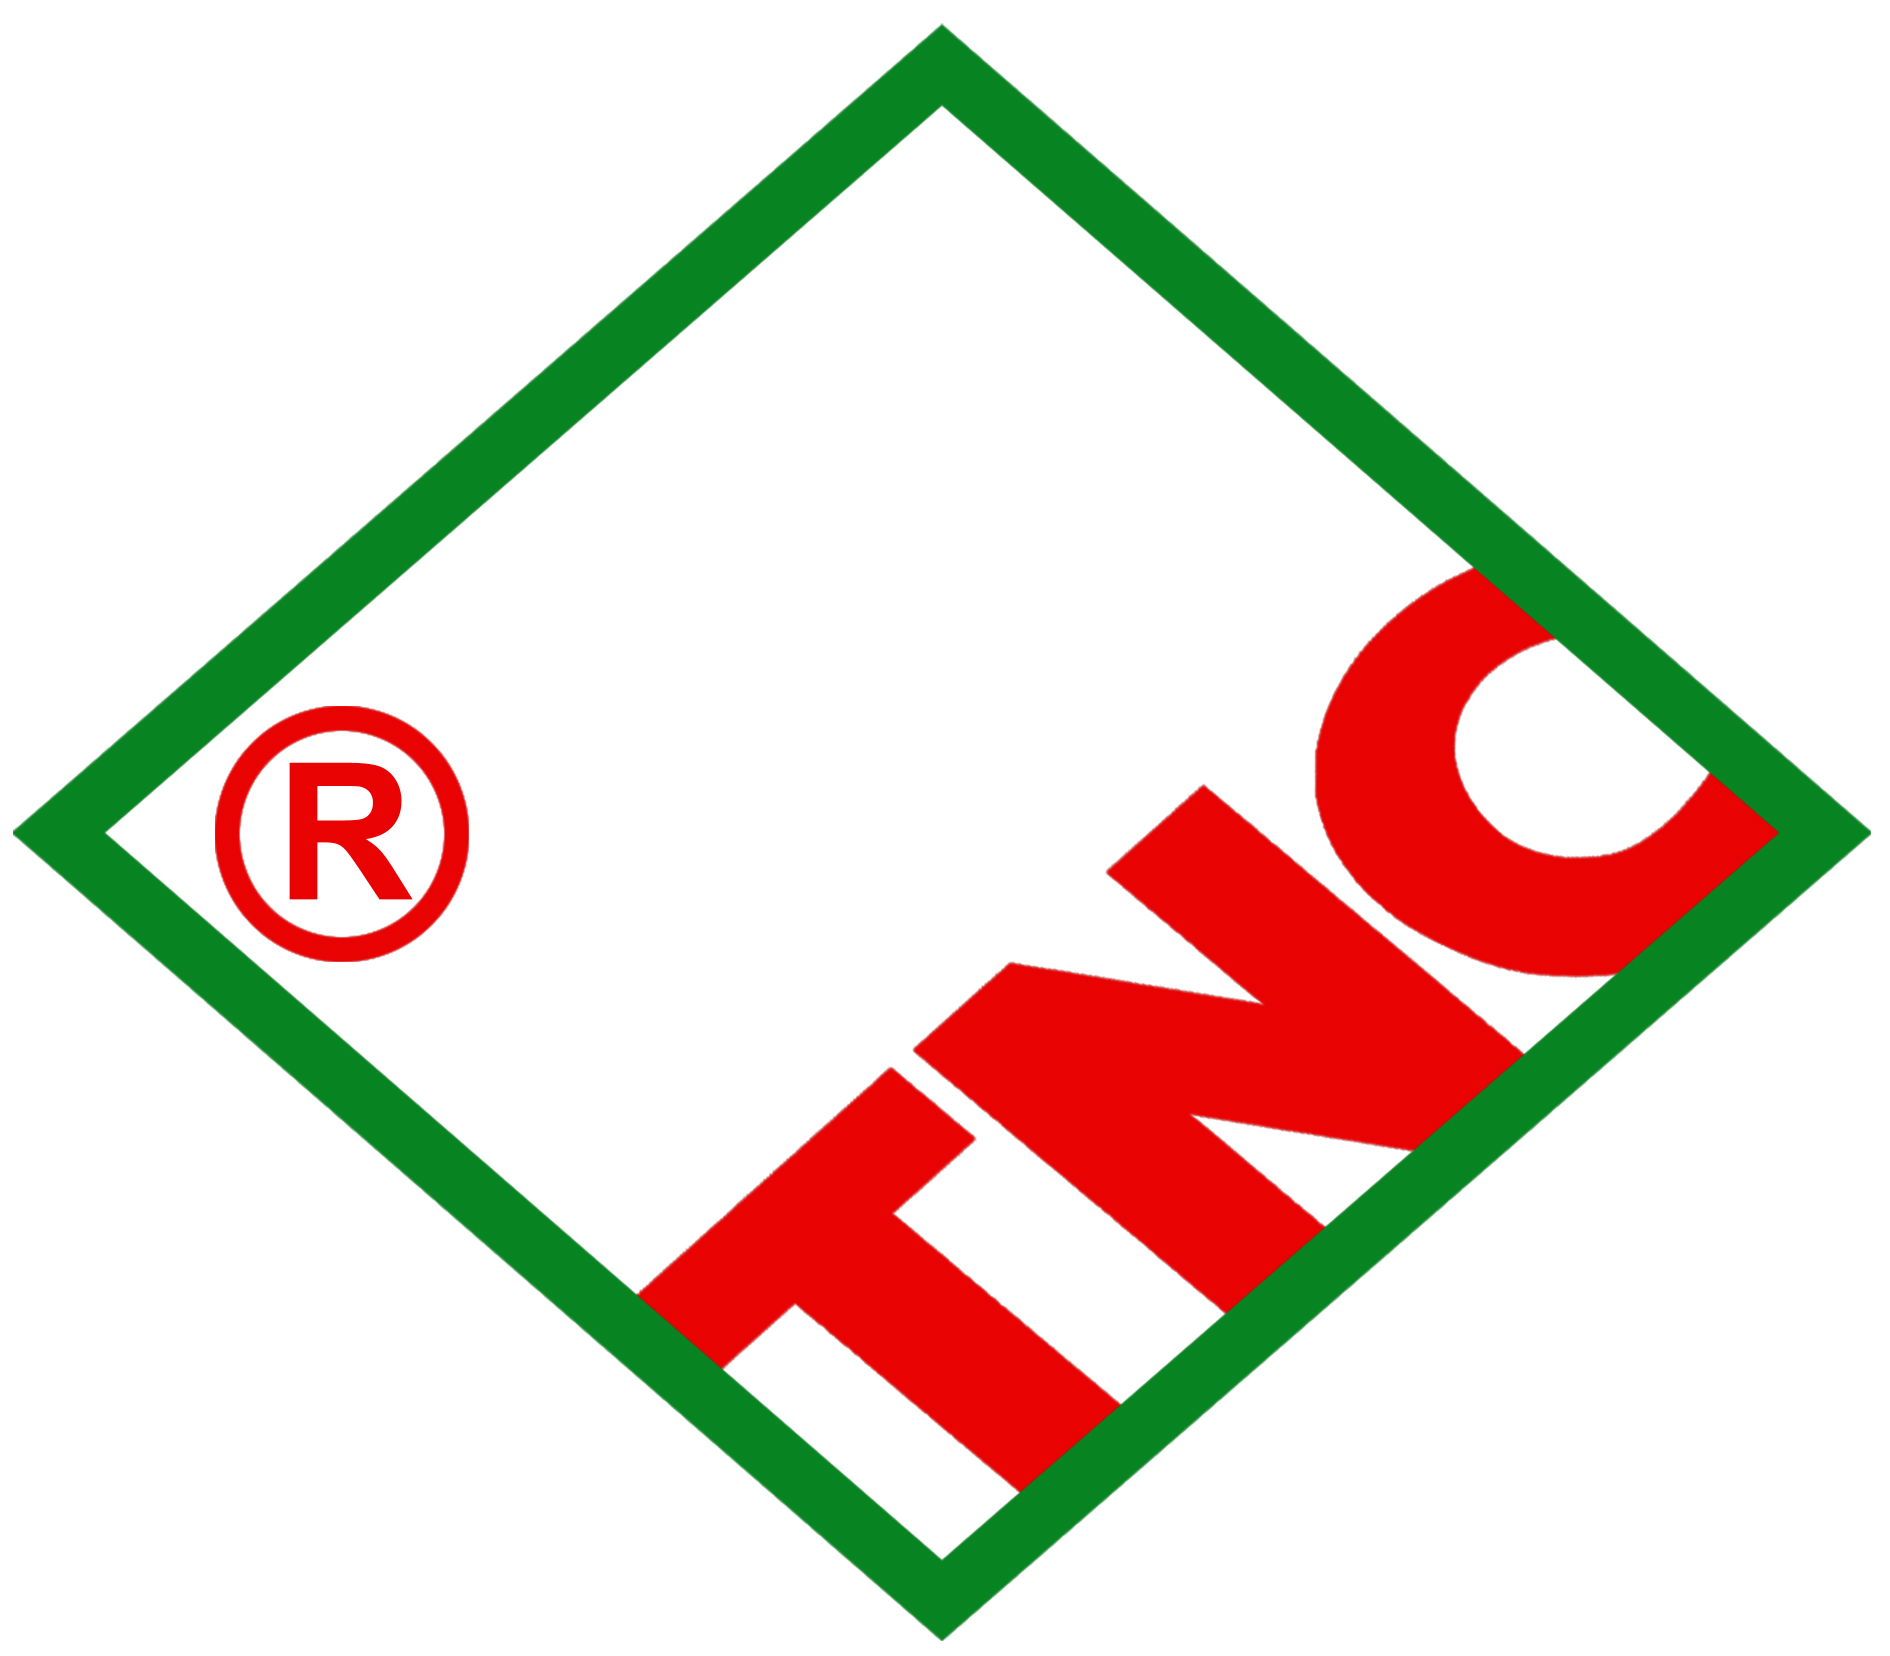 TNC